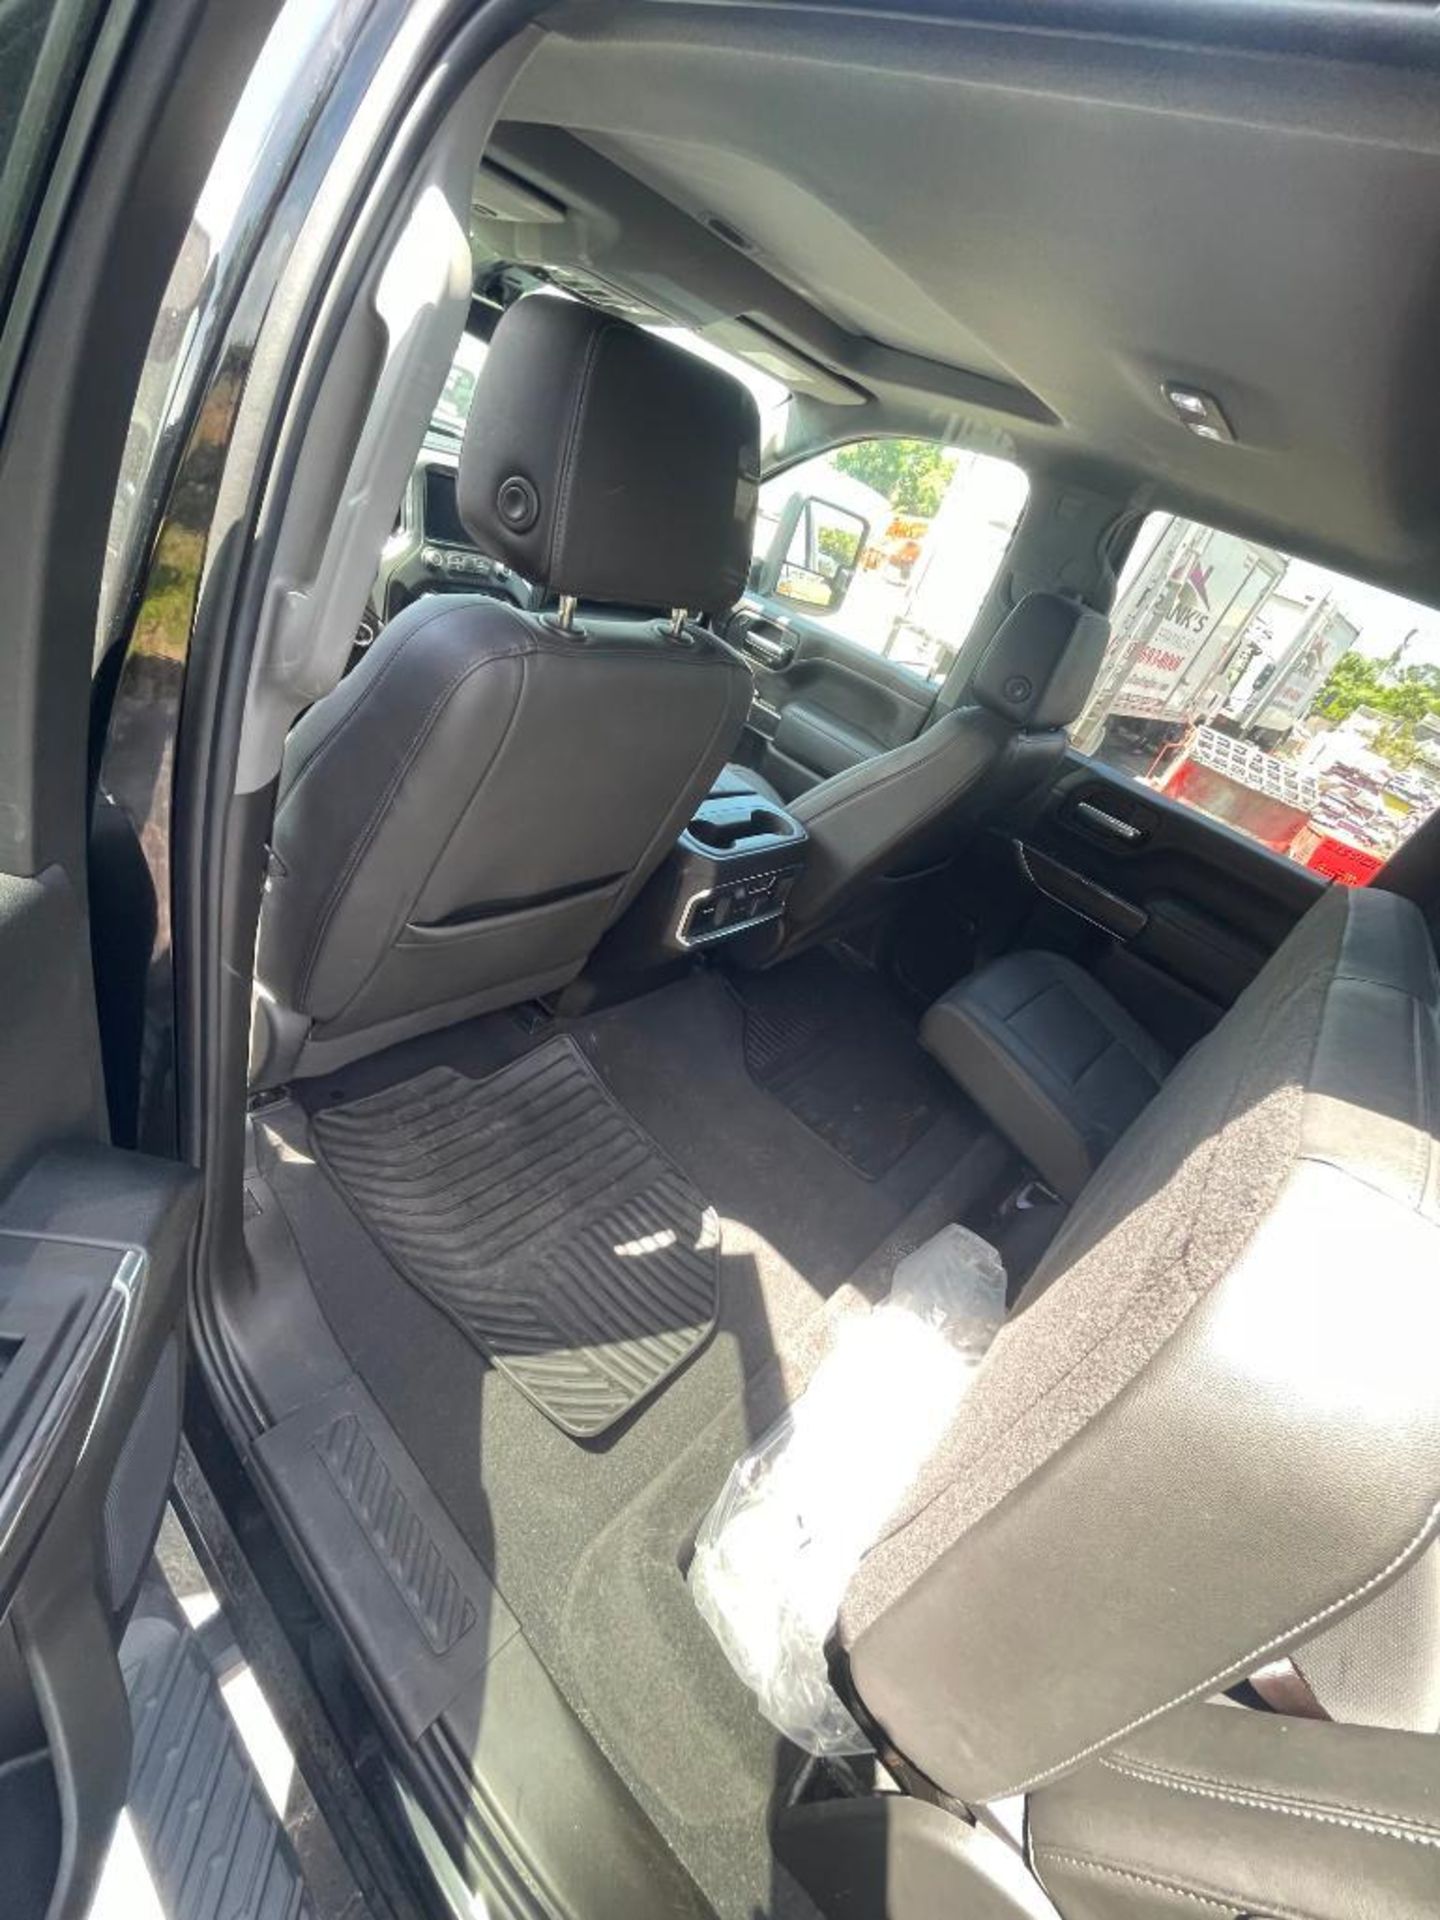 2021 Chevy Silverado 2500 4WD Z71 Crew Cab (Black) Tool Box, Diesel, License# QJZ-Q58VIN 1GC4YPEY0MF - Image 15 of 15